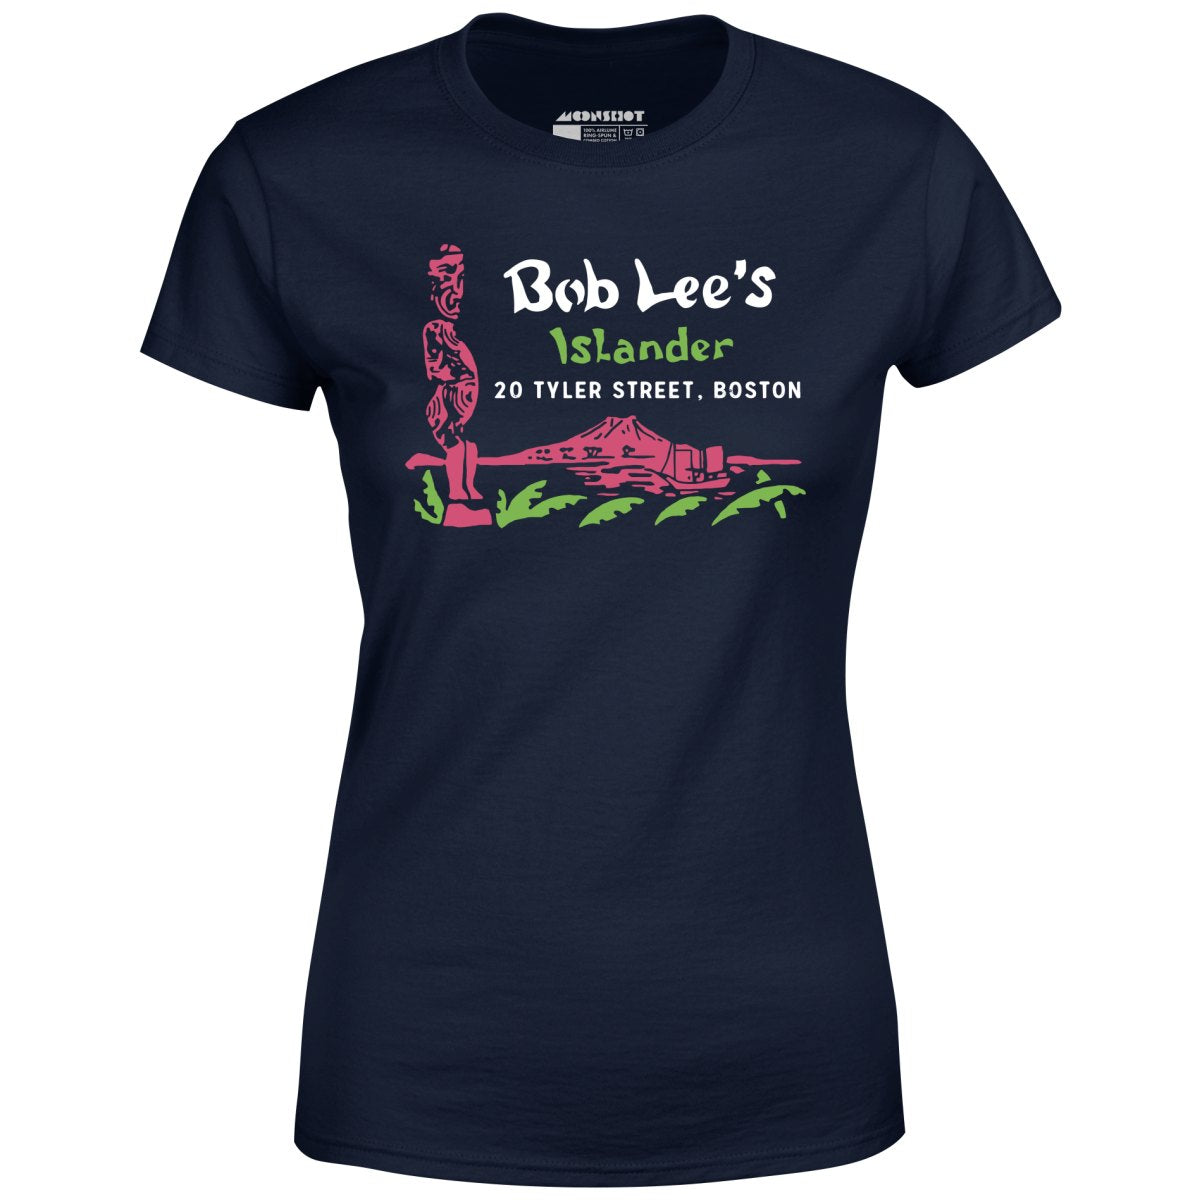 Bob Lee's Islander - Boston, MA - Vintage Tiki Bar - Women's T-Shirt